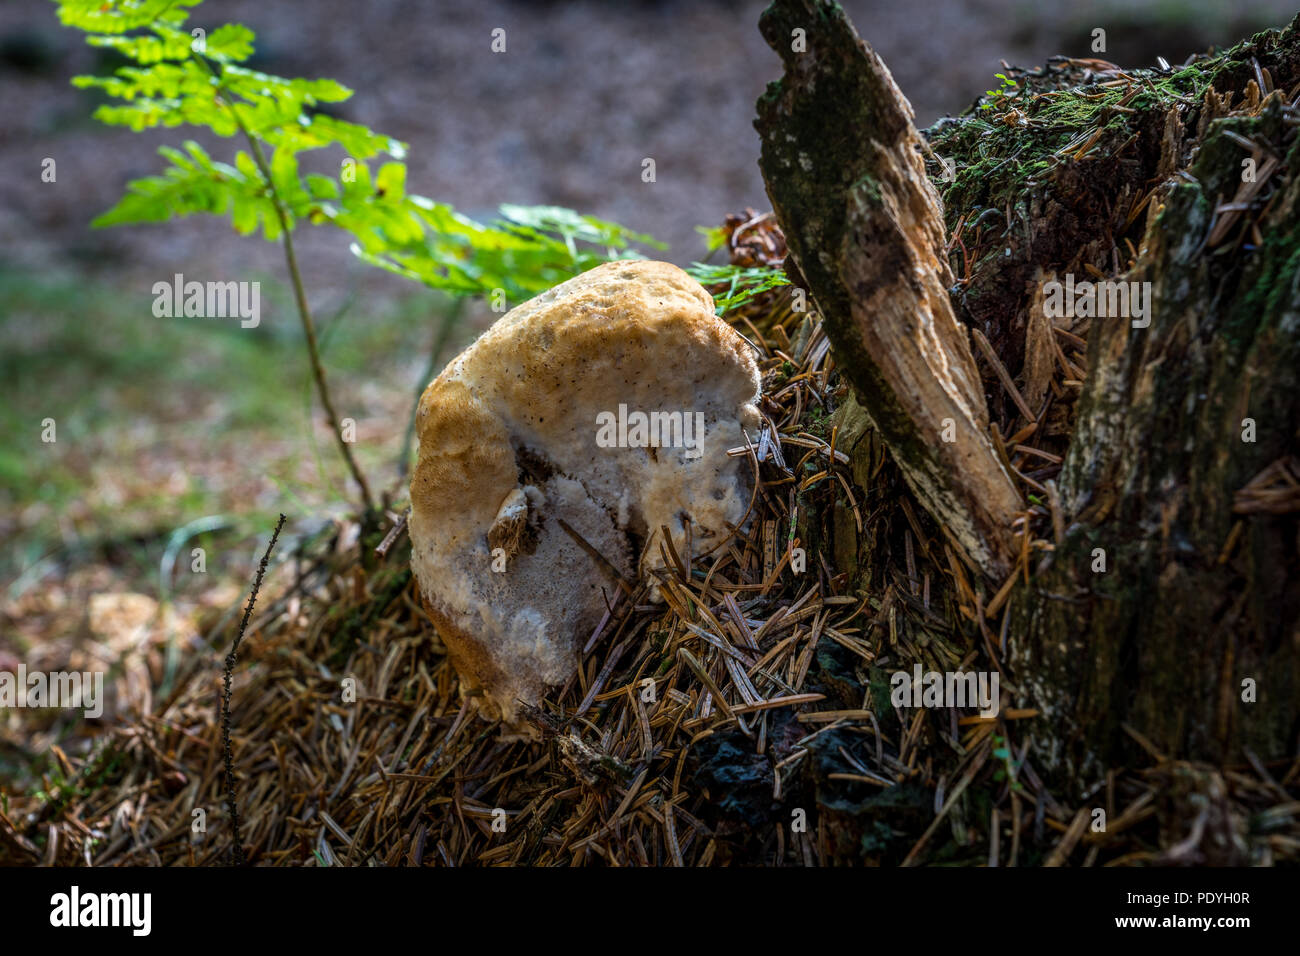 The slime mold Oligoporous at the base of a pine tree stump. Stock Photo